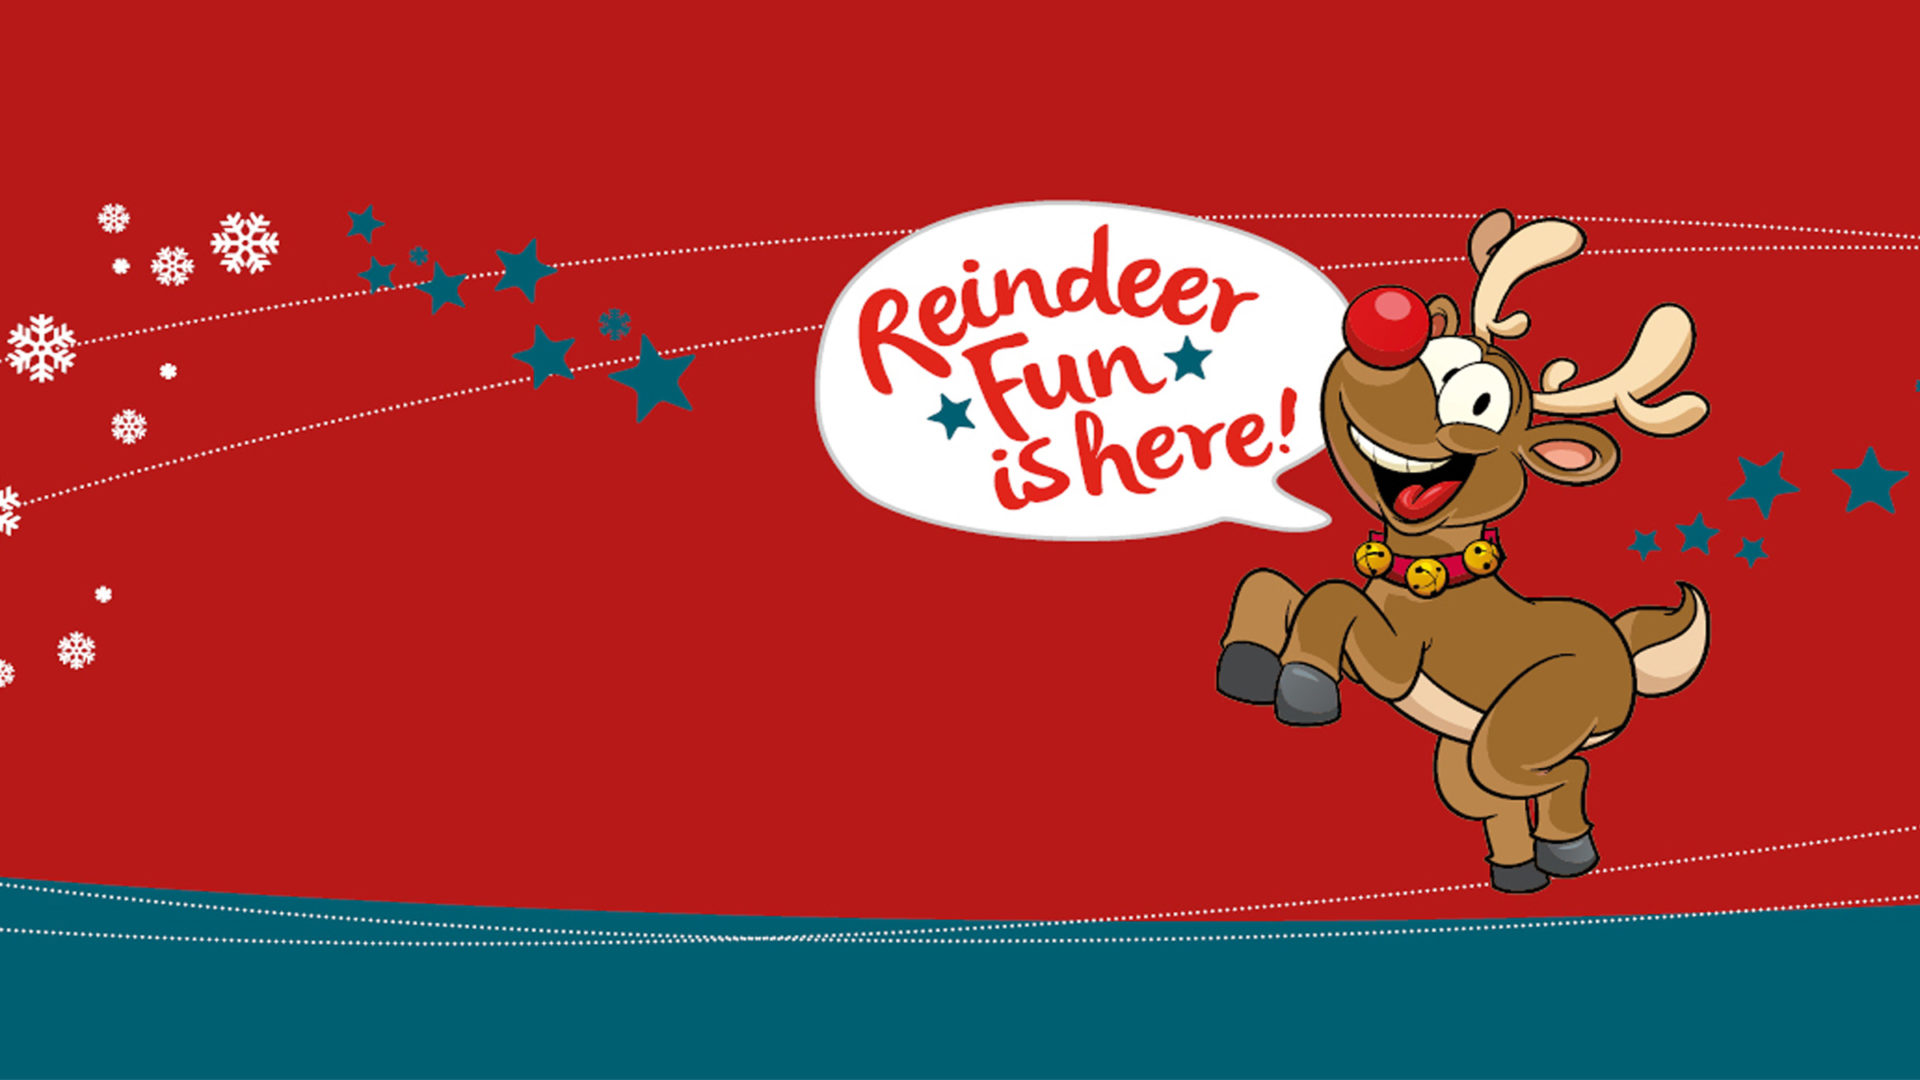 Reindeer with speech bubble announcing "Reindeer Fun is here!"